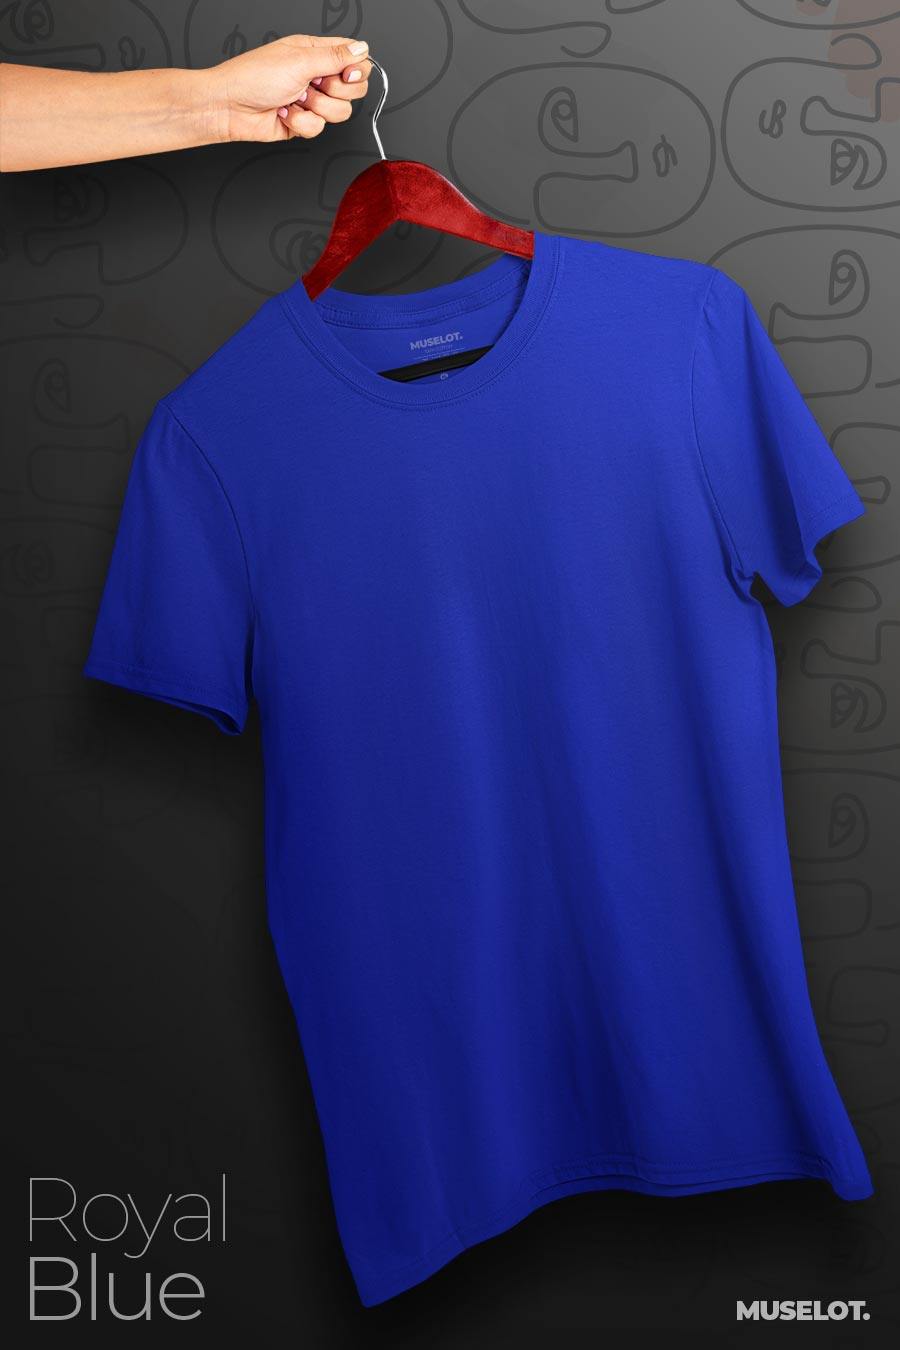 plain t shirts - Plus size t shirts (dark solid colors)  - MUSELOT